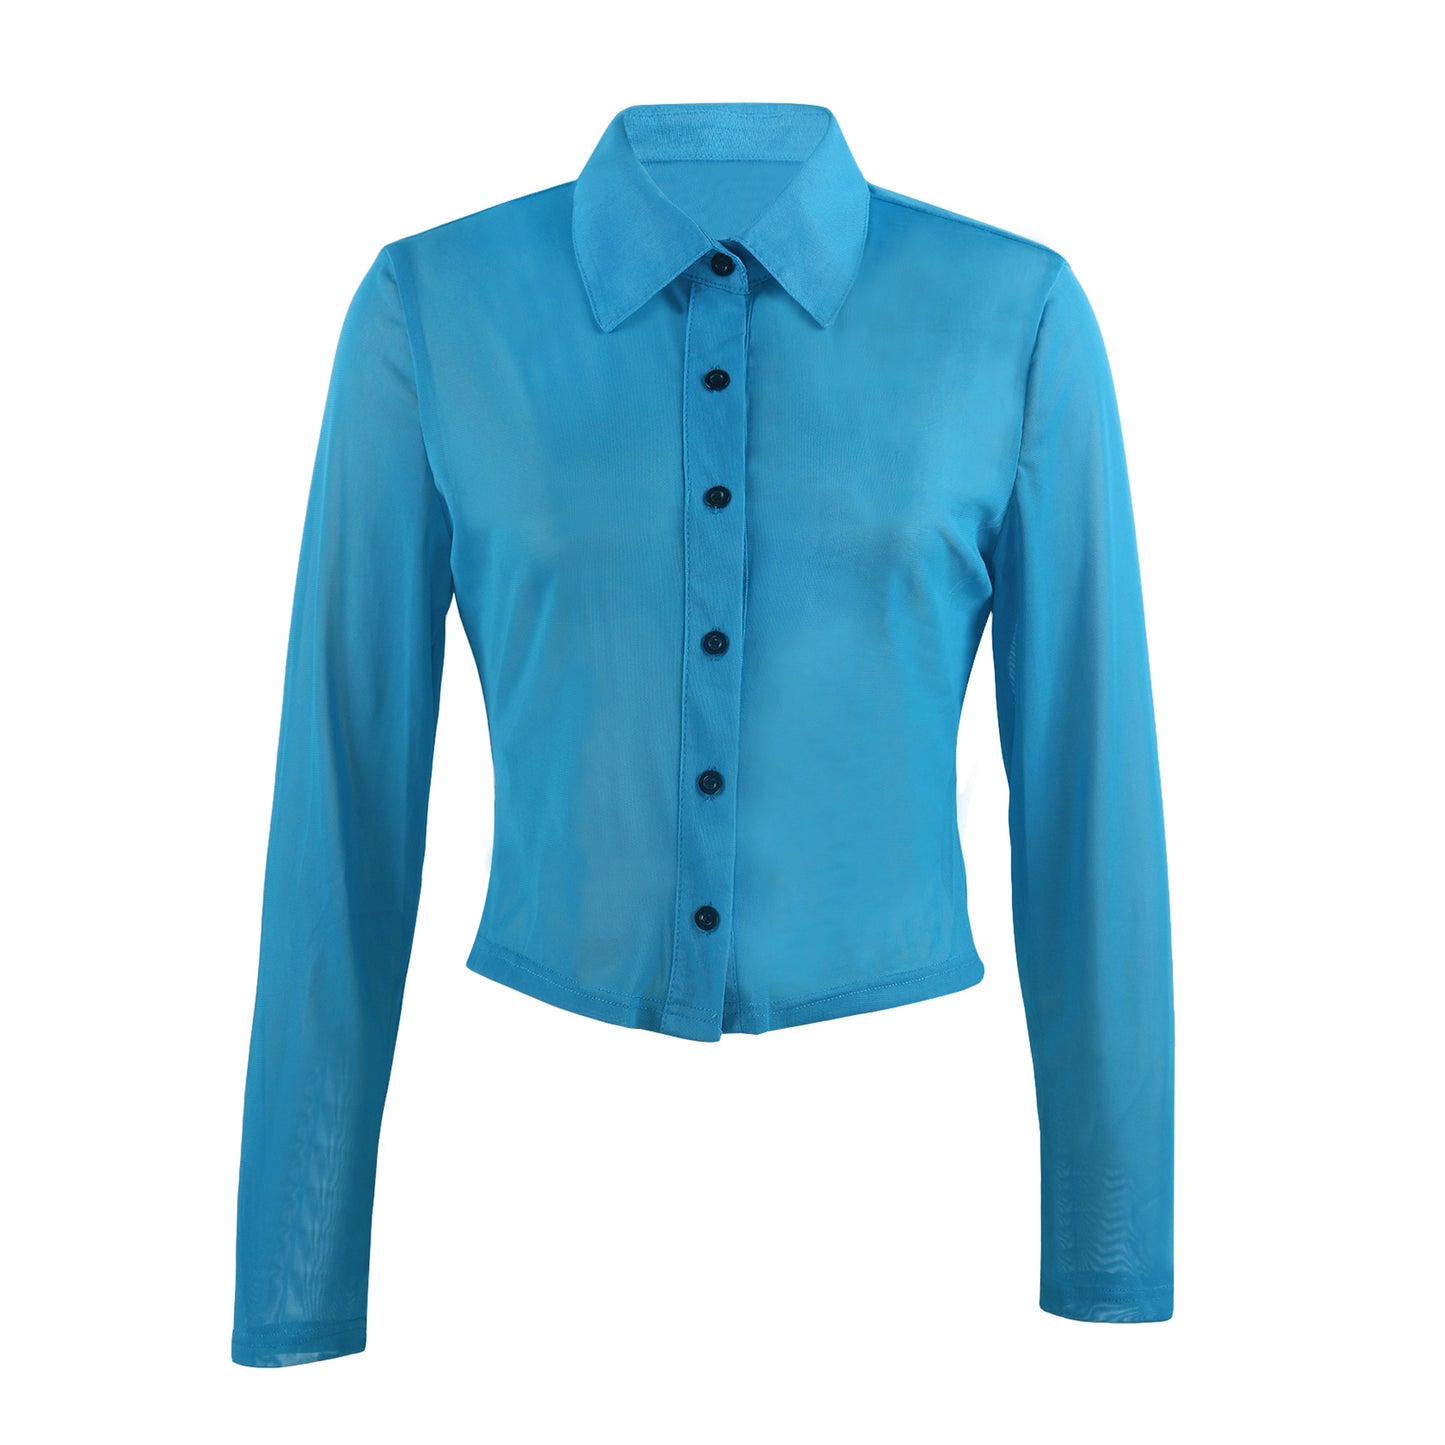 Fashion Women Sexy Shirt Tops-Shirts & Tops-Blue-S-Free Shipping at meselling99